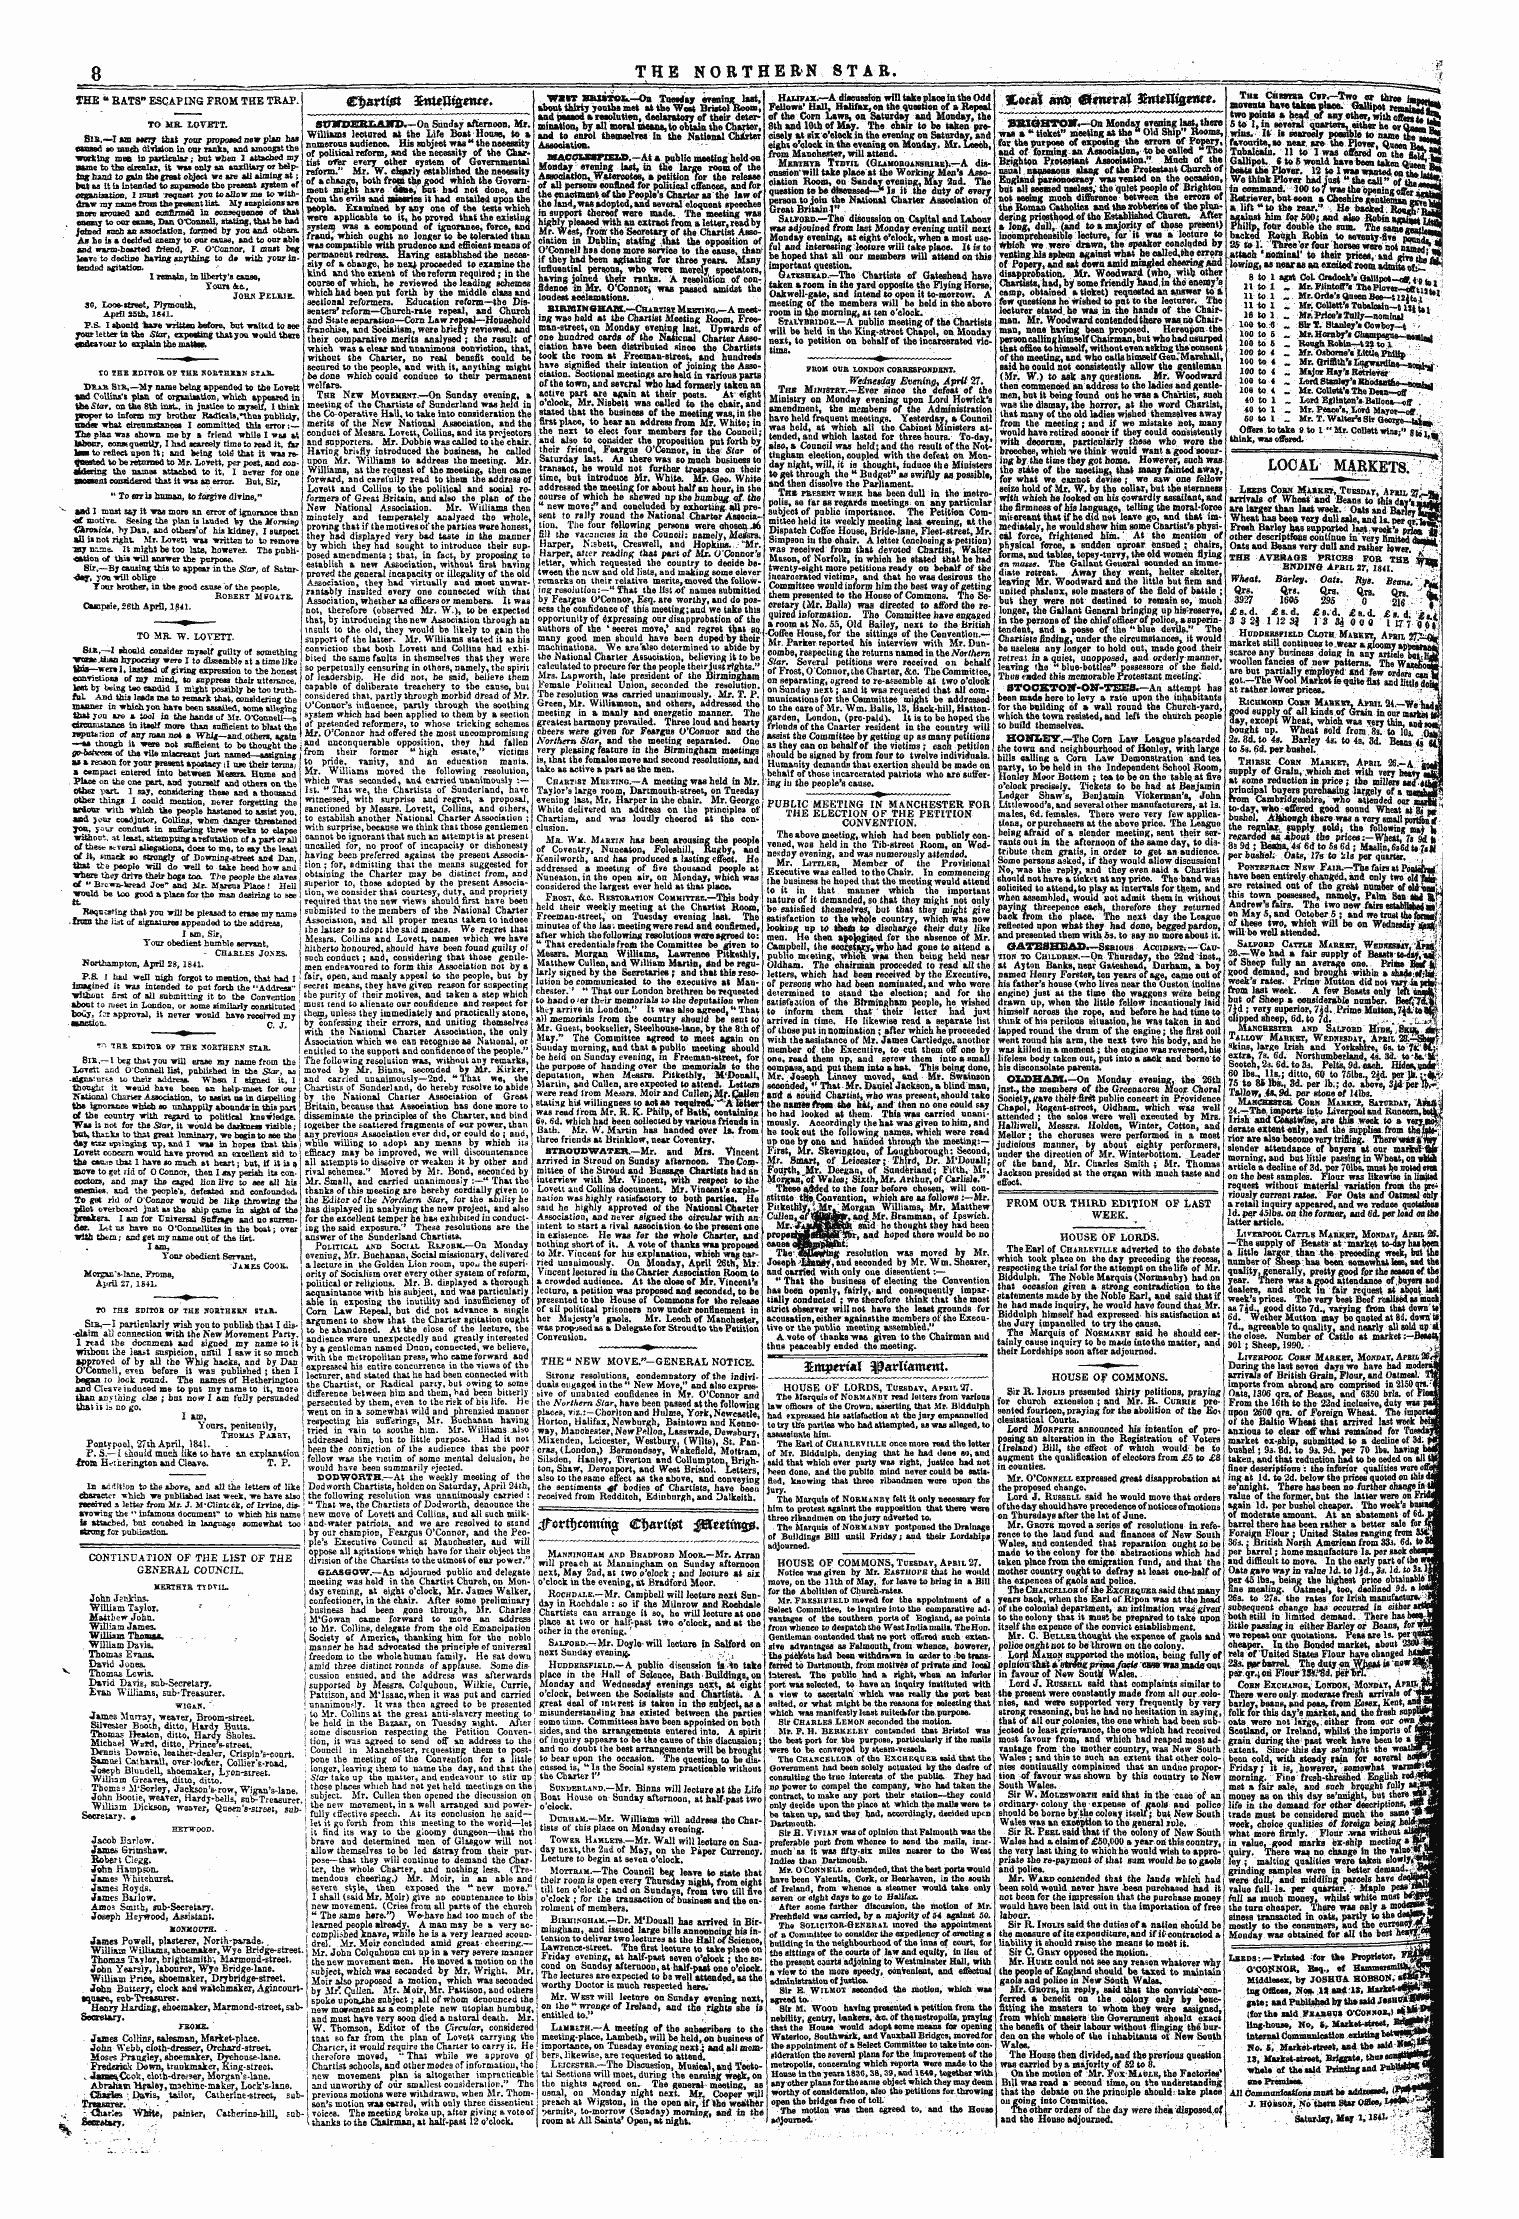 Northern Star (1837-1852): jS F Y, 1st edition - %Ota\ Orof Timtvax %Teu%Eiw.